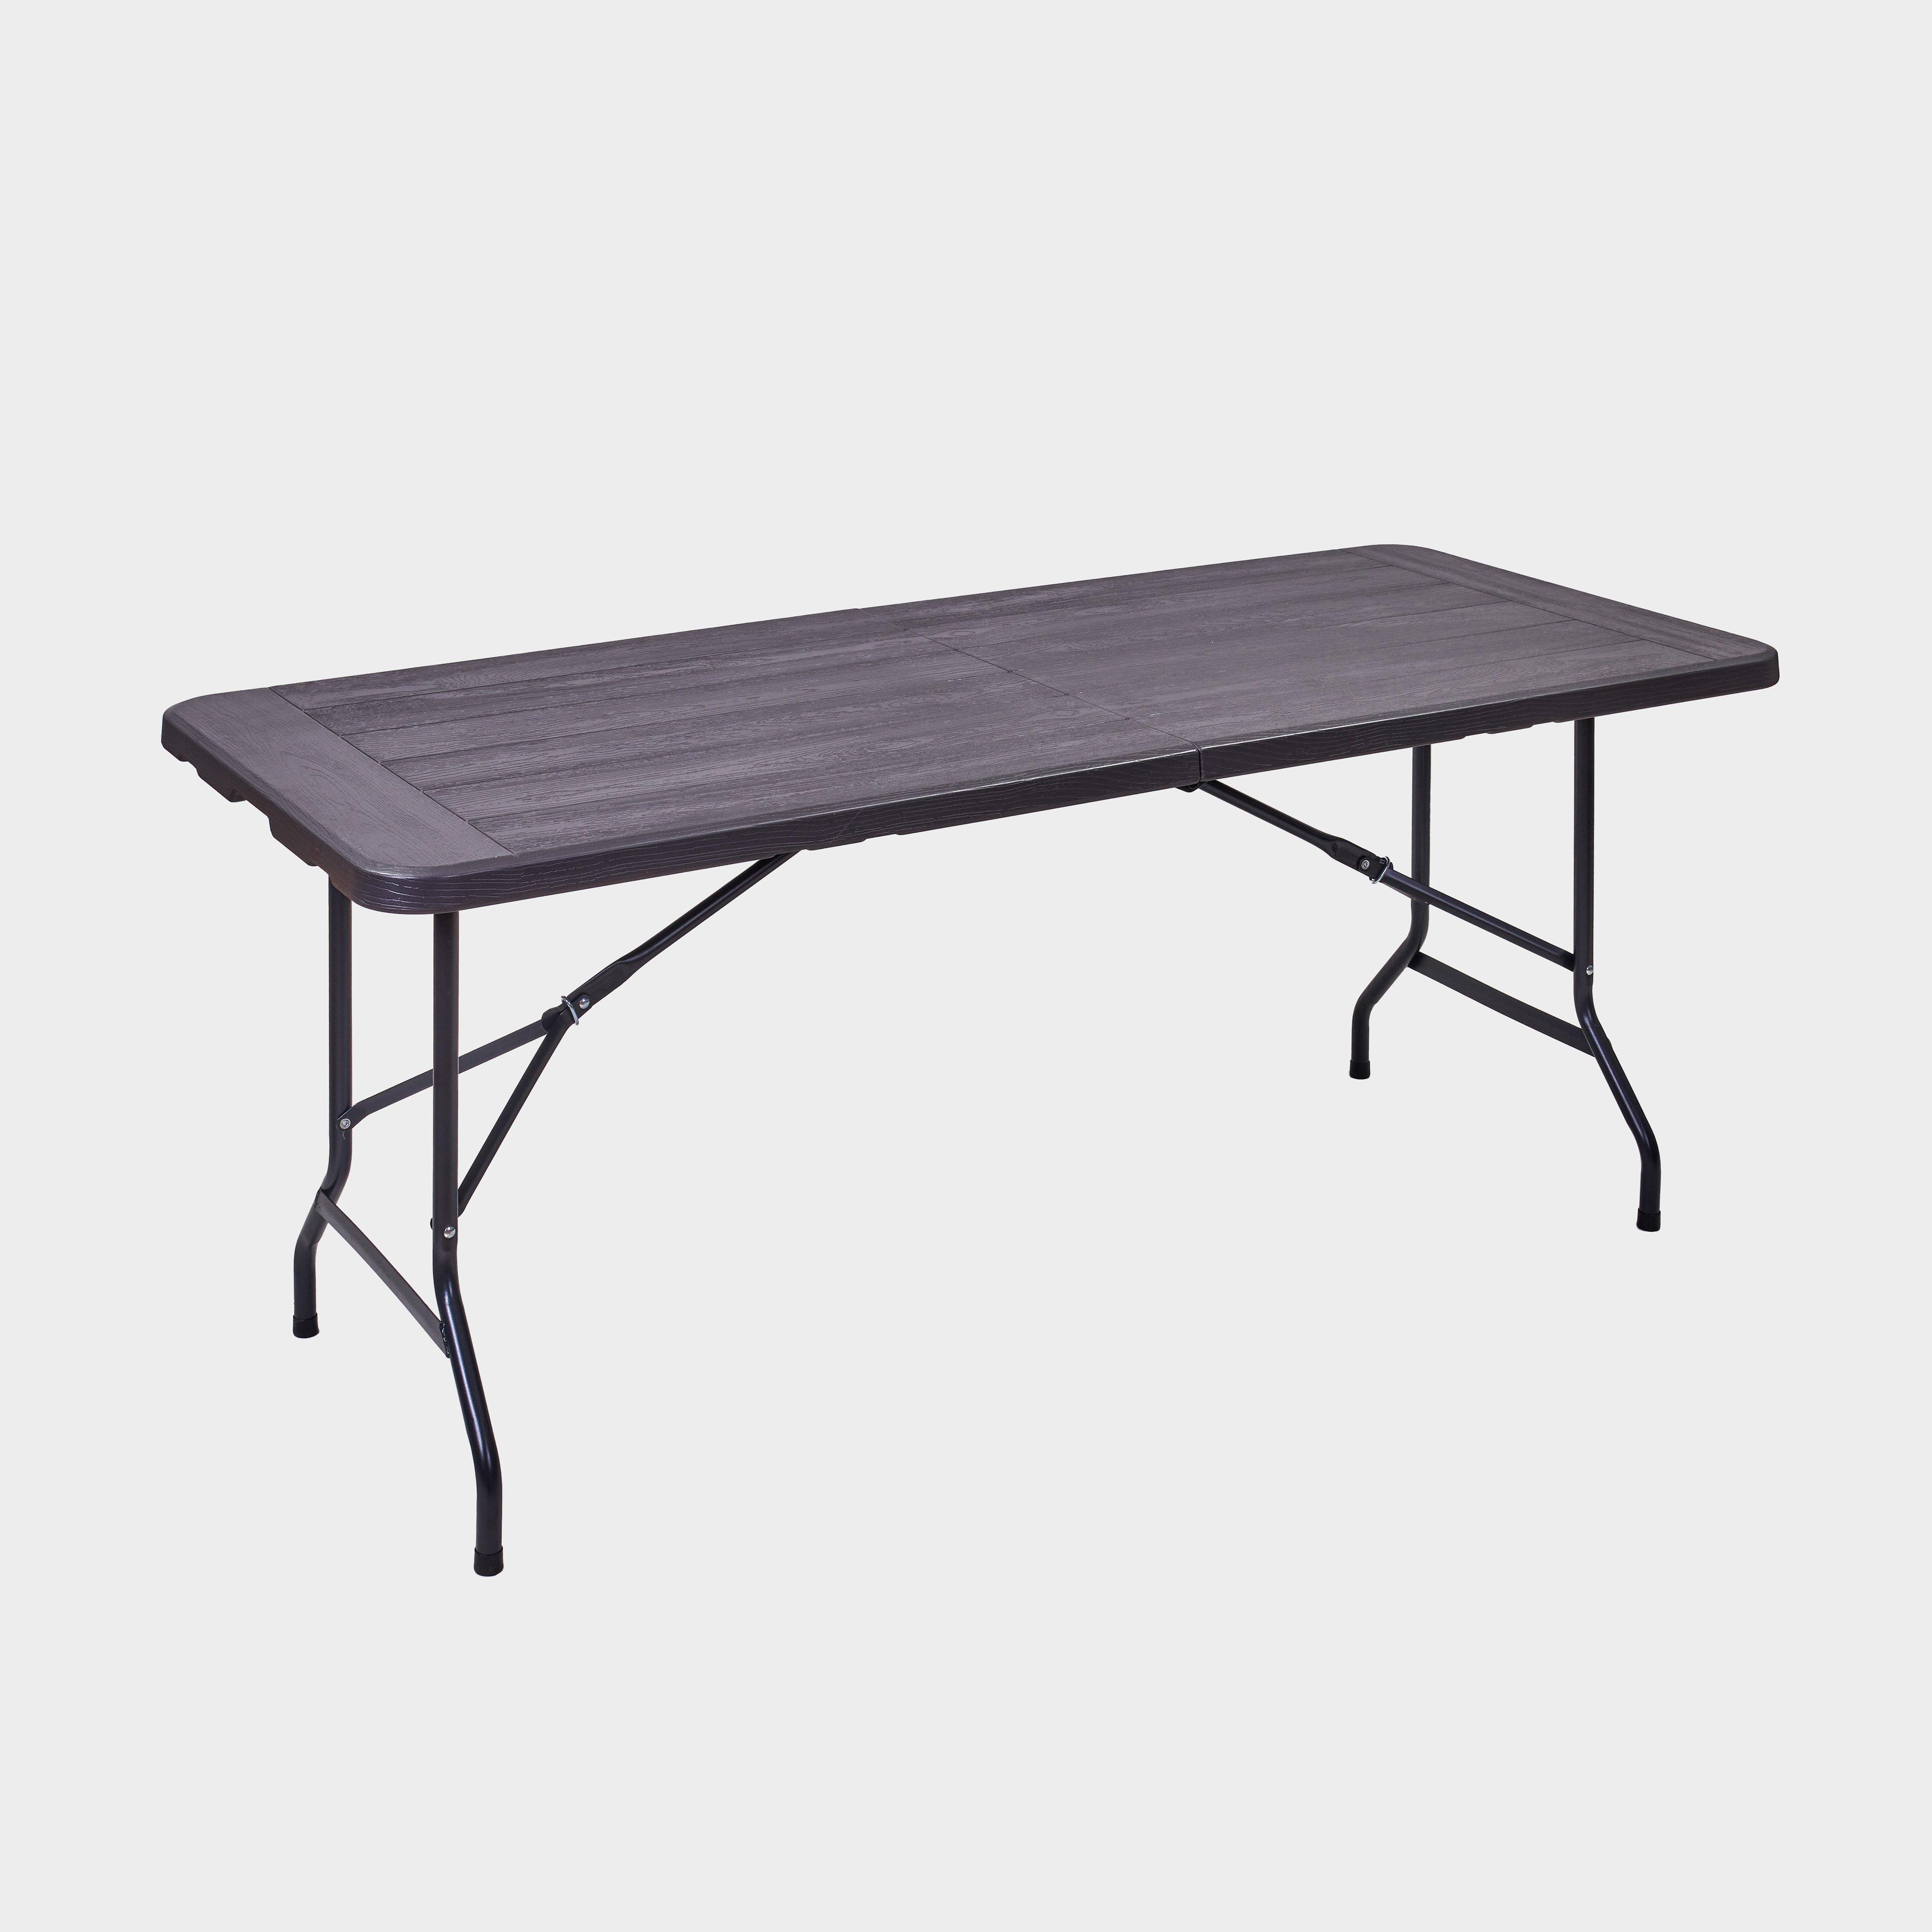  HI-GEAR Richmond 6ft Folding Table, Brown